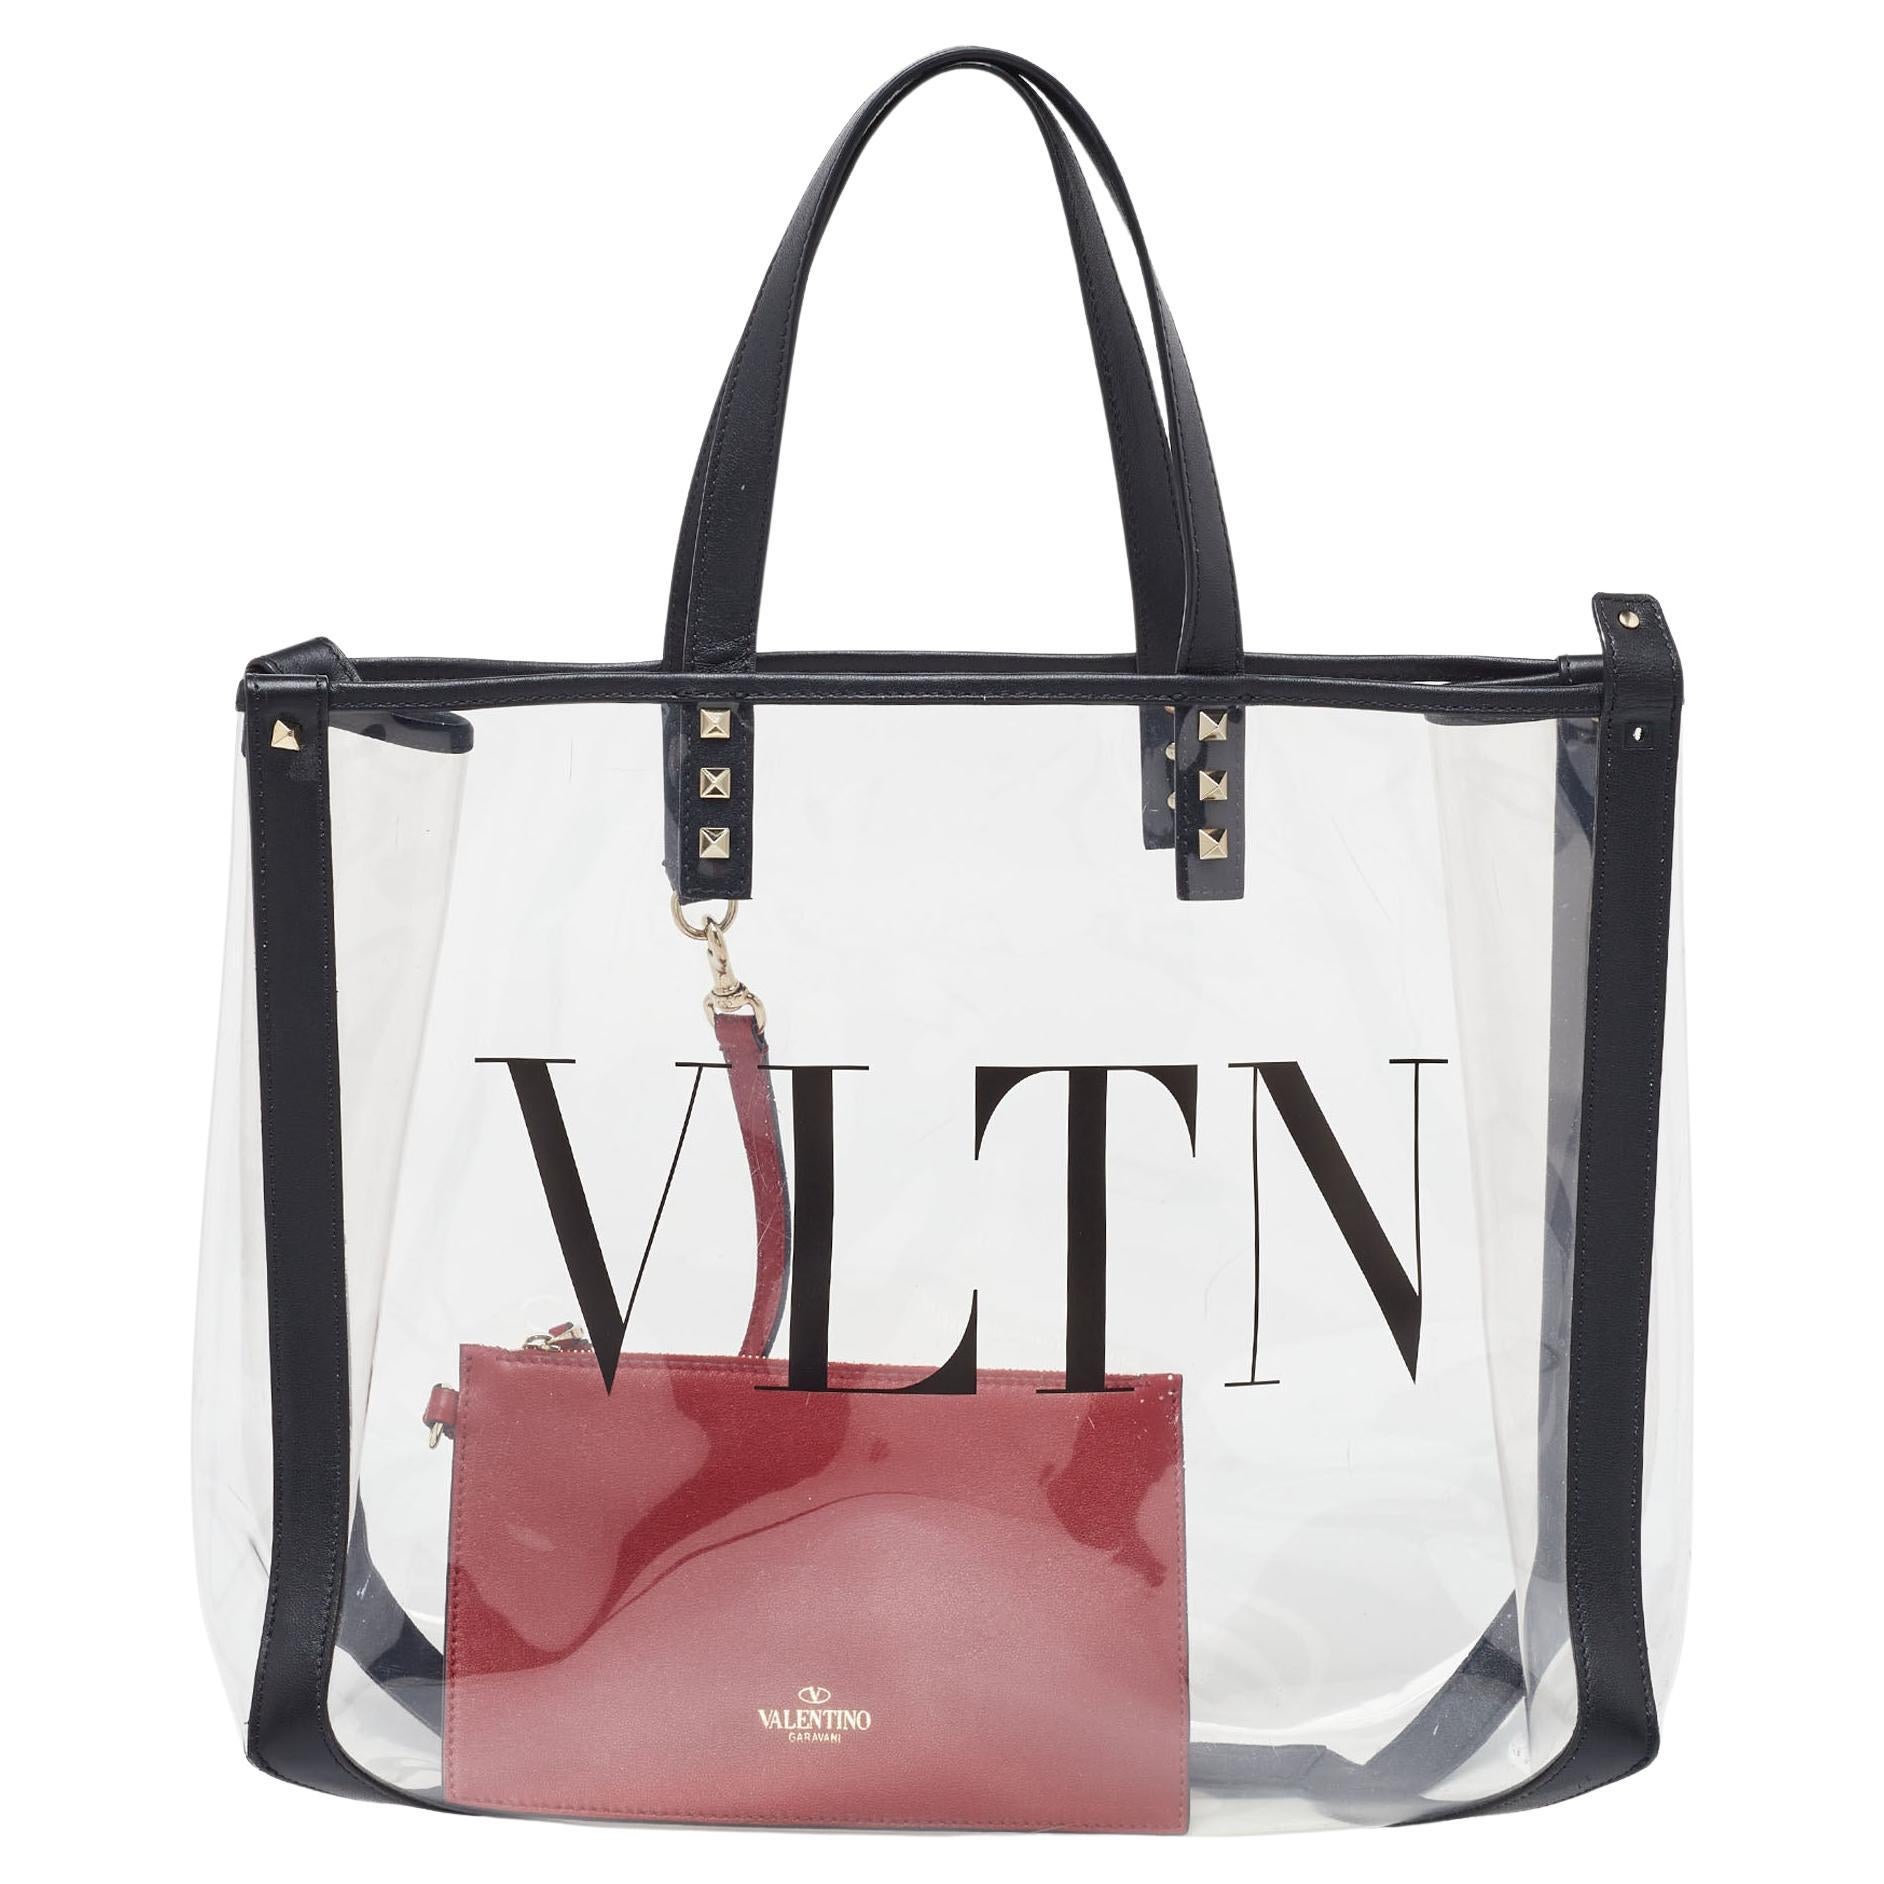 Valenitno Transparent/Black PVC and Leather VLTN Shopper Tote